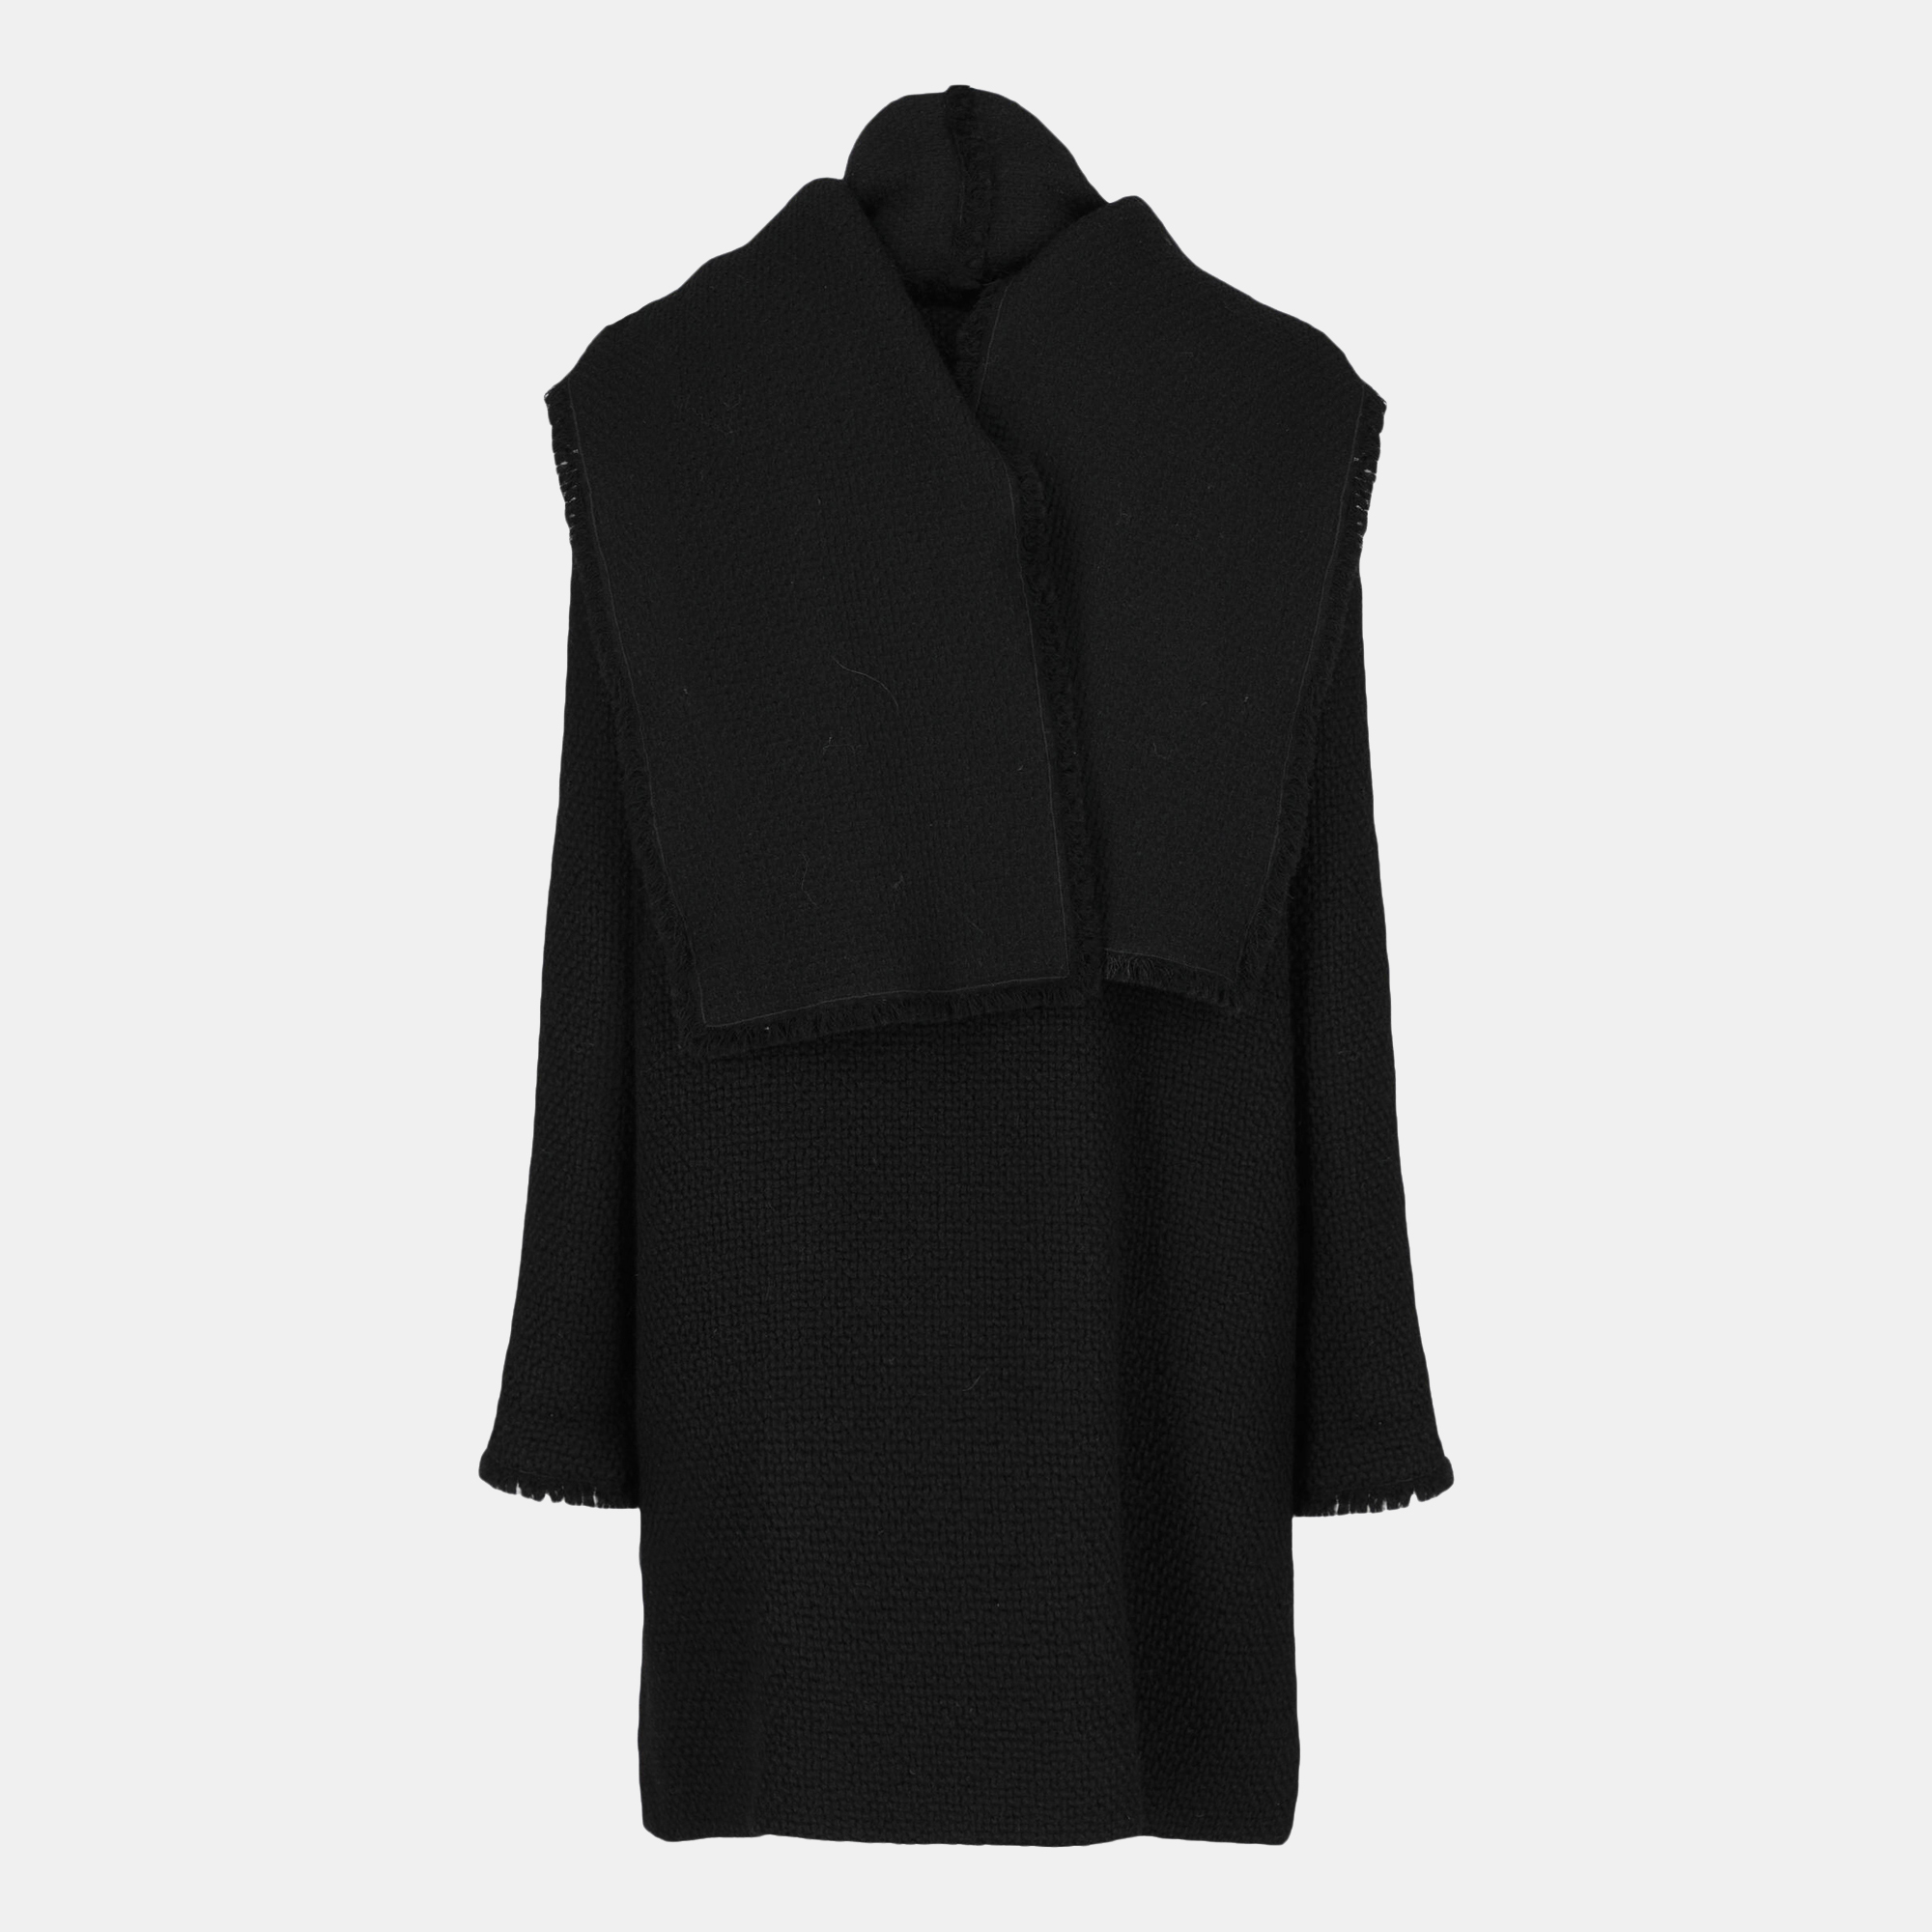 Dolce & Gabbana  Women's Wool Single Breasted Coat - Black - M